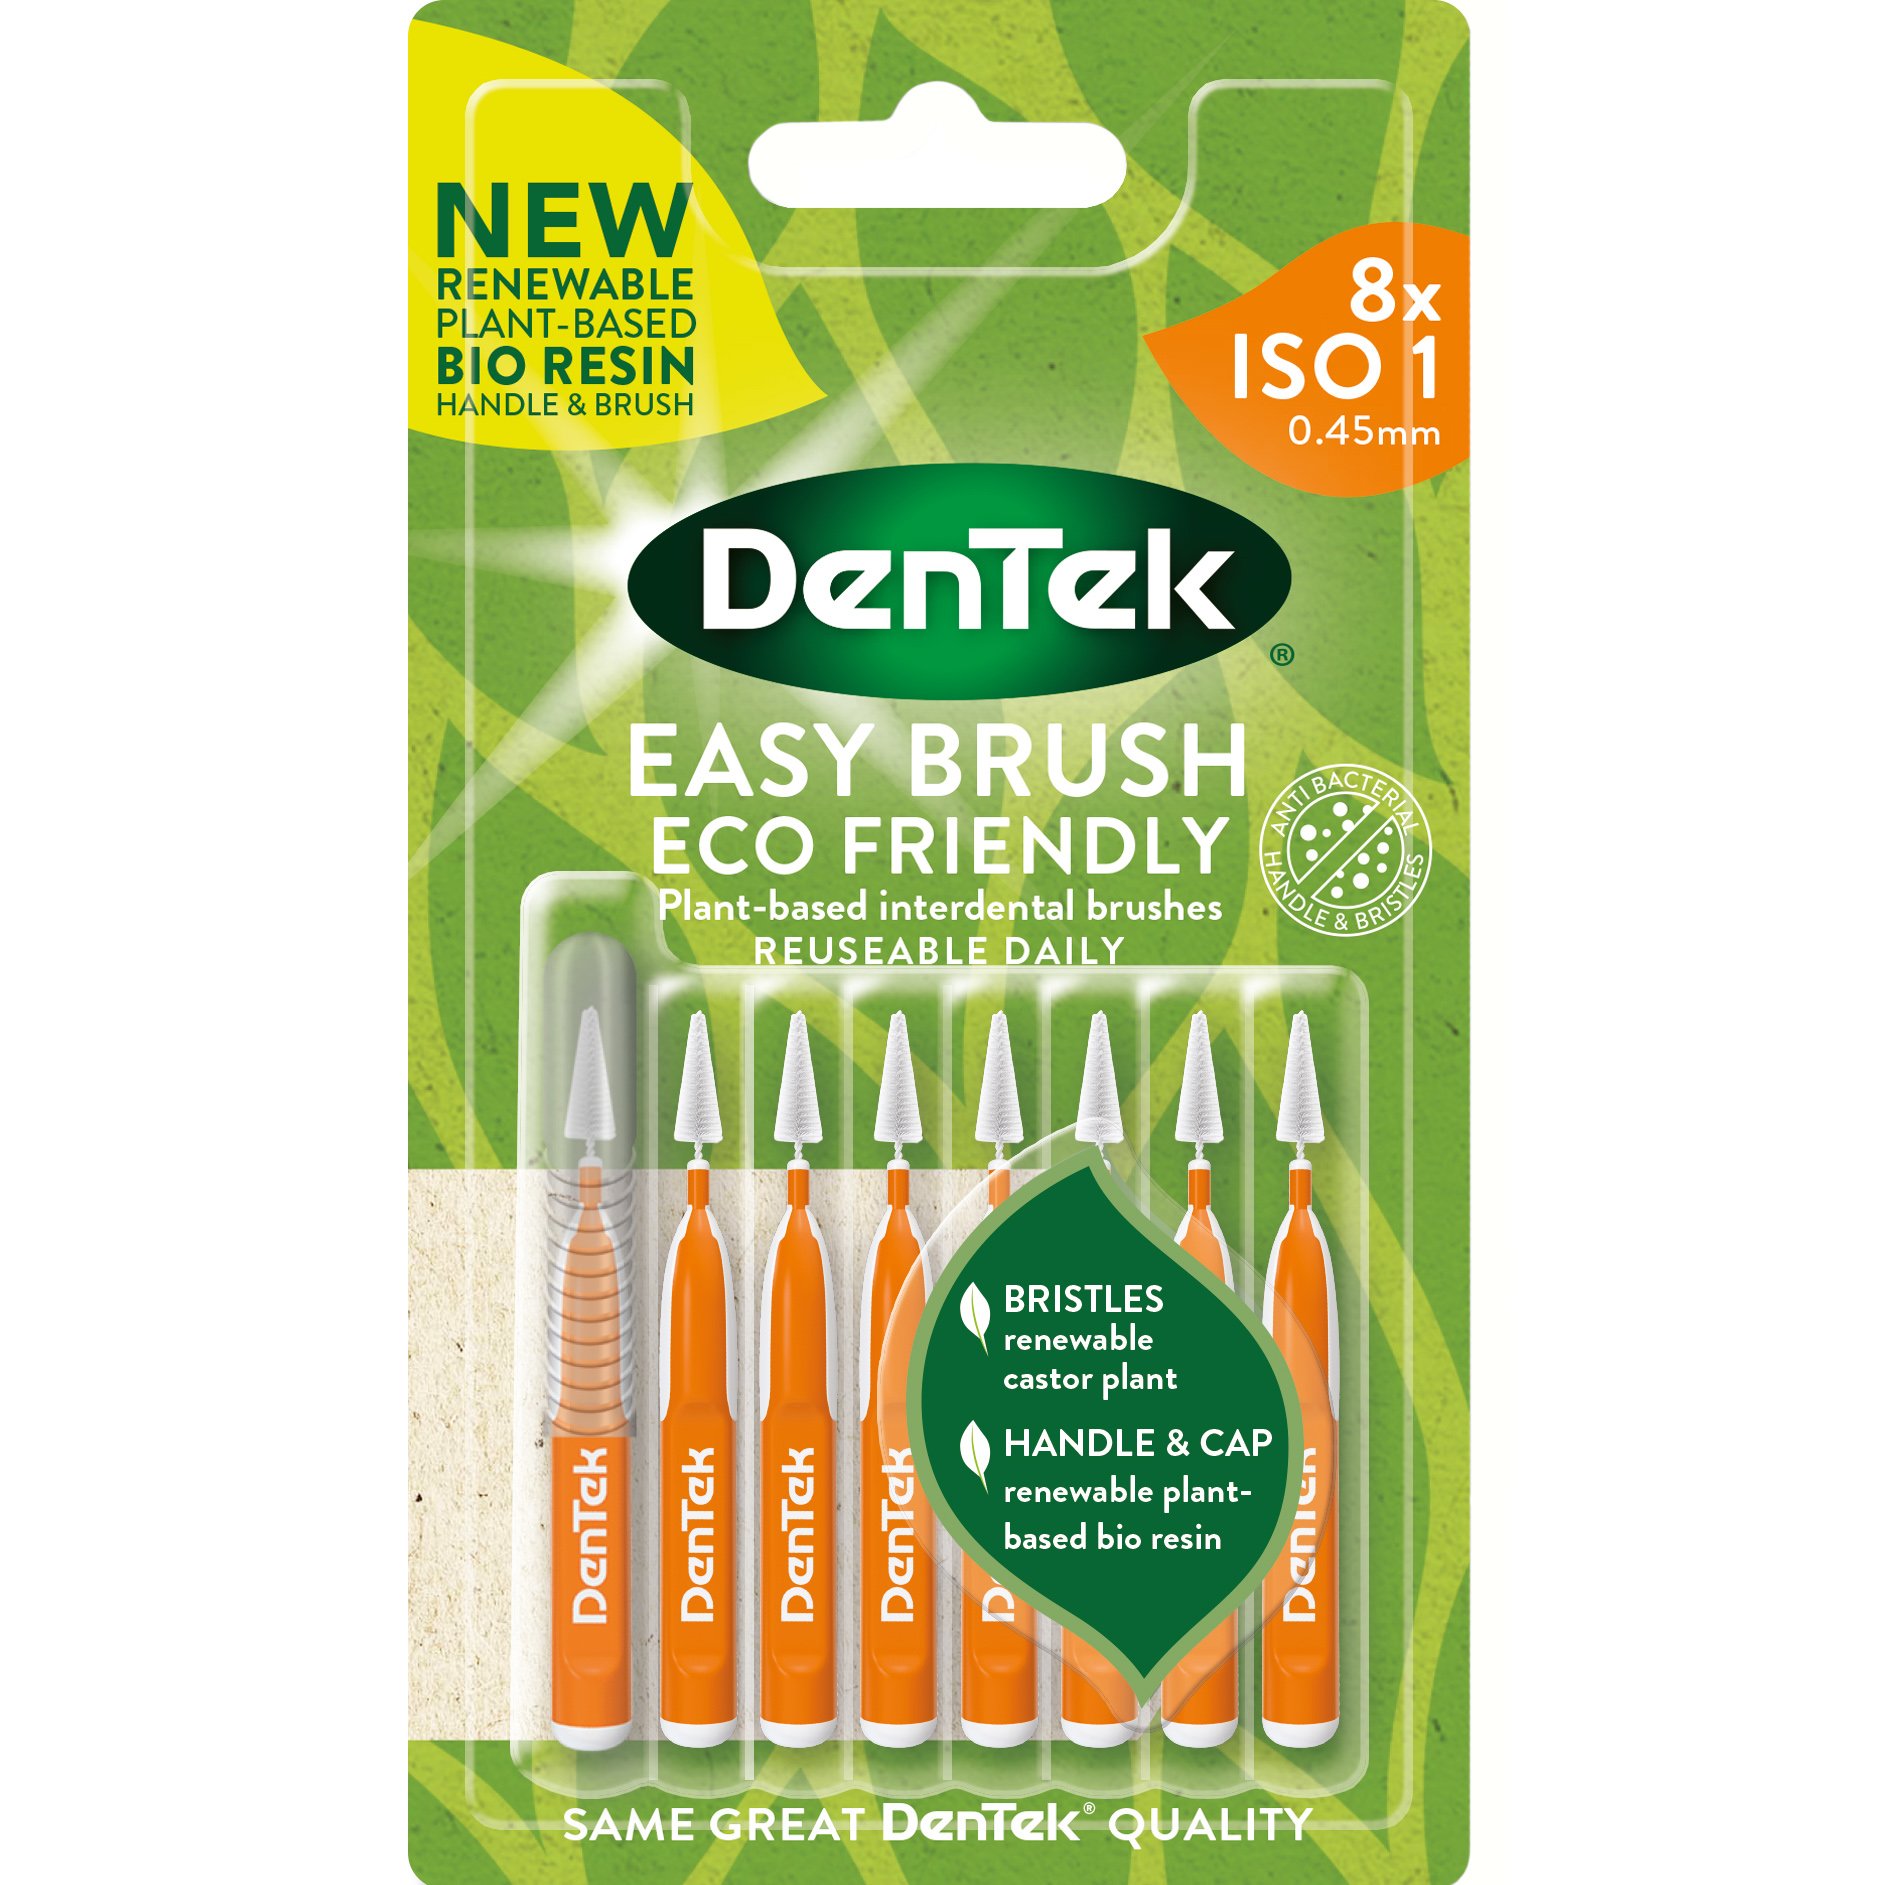 Dentek Easy Brush Interdental Brushes Size/ISO 1 (0,45mm) Μεσοδόντια Βουρτσάκια Μικρού Μεγέθους 8 Τεμάχια